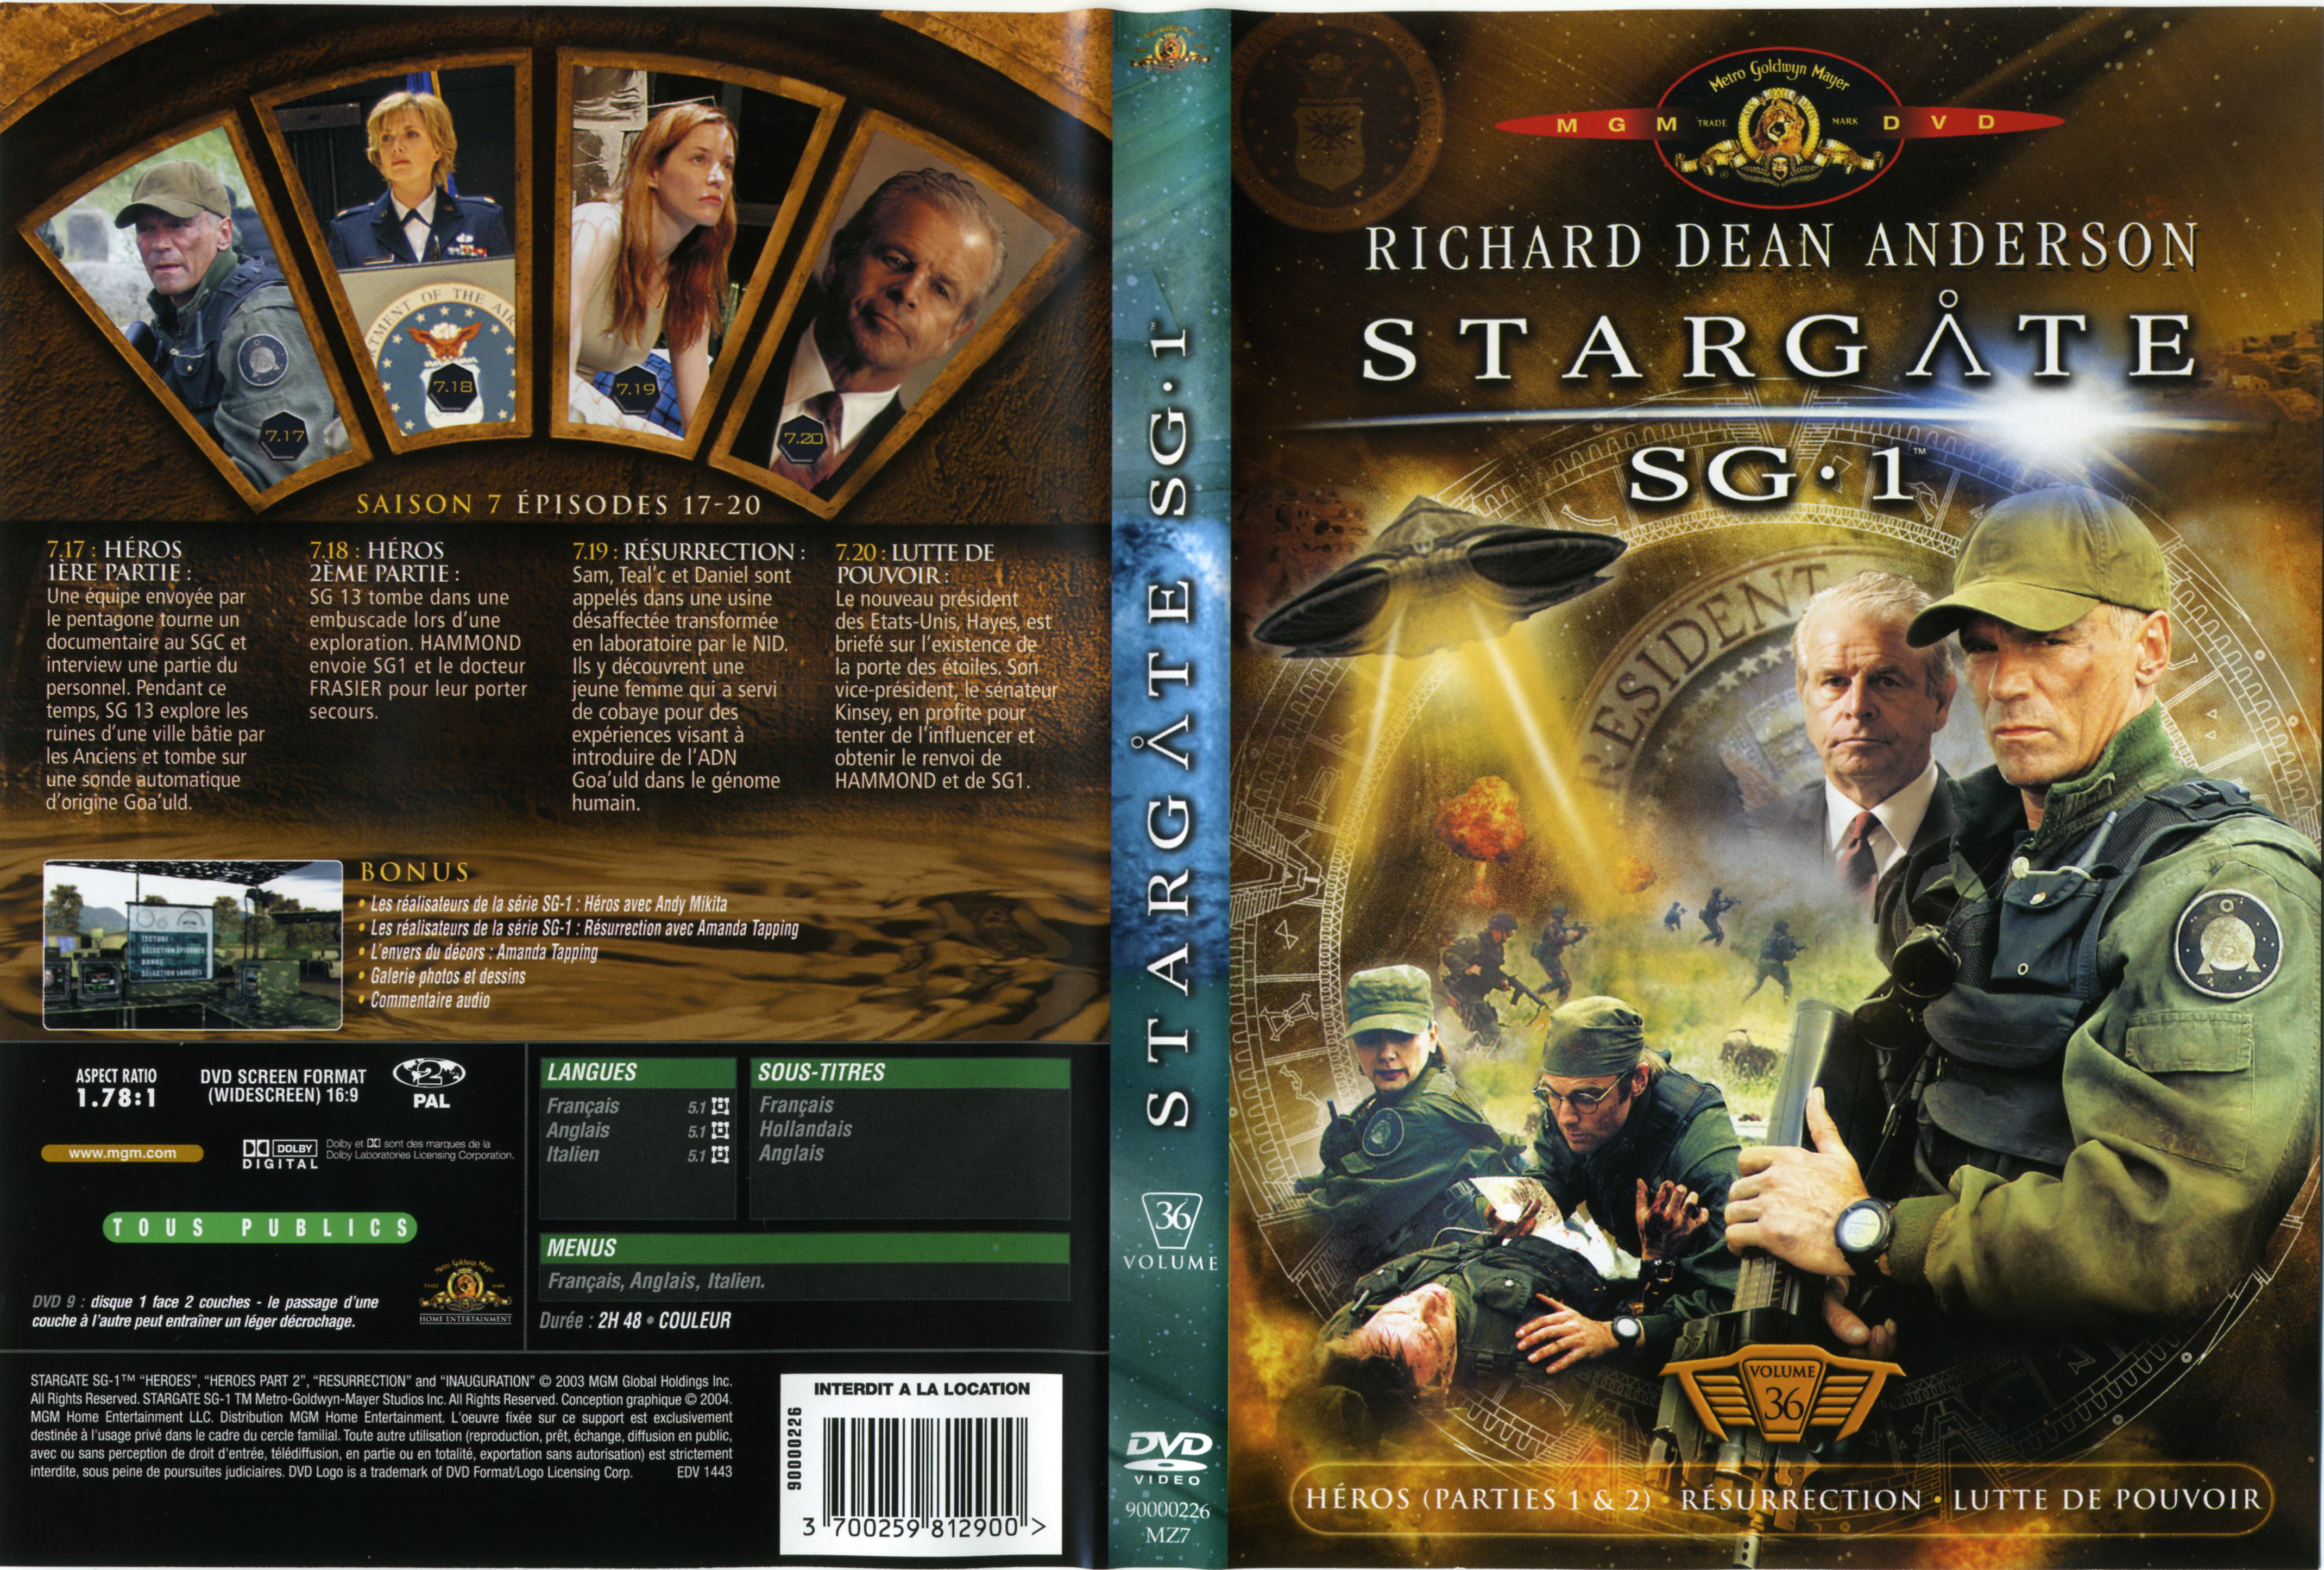 Jaquette DVD Stargate SG1 vol 36